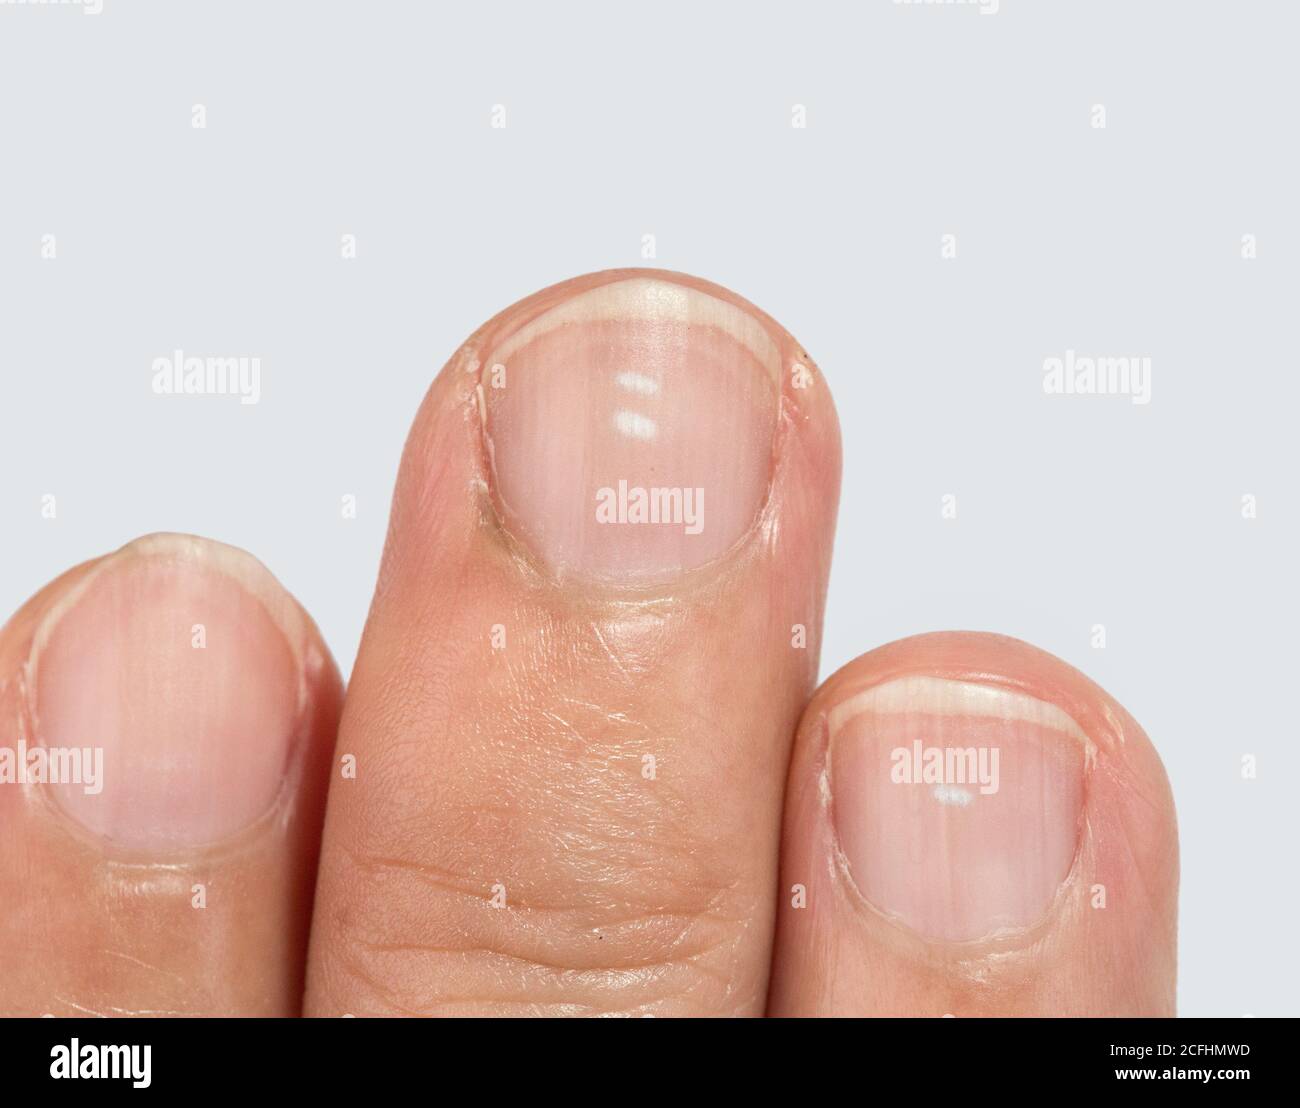 Worried About White Spots On Fingernails? - DrWeil.com